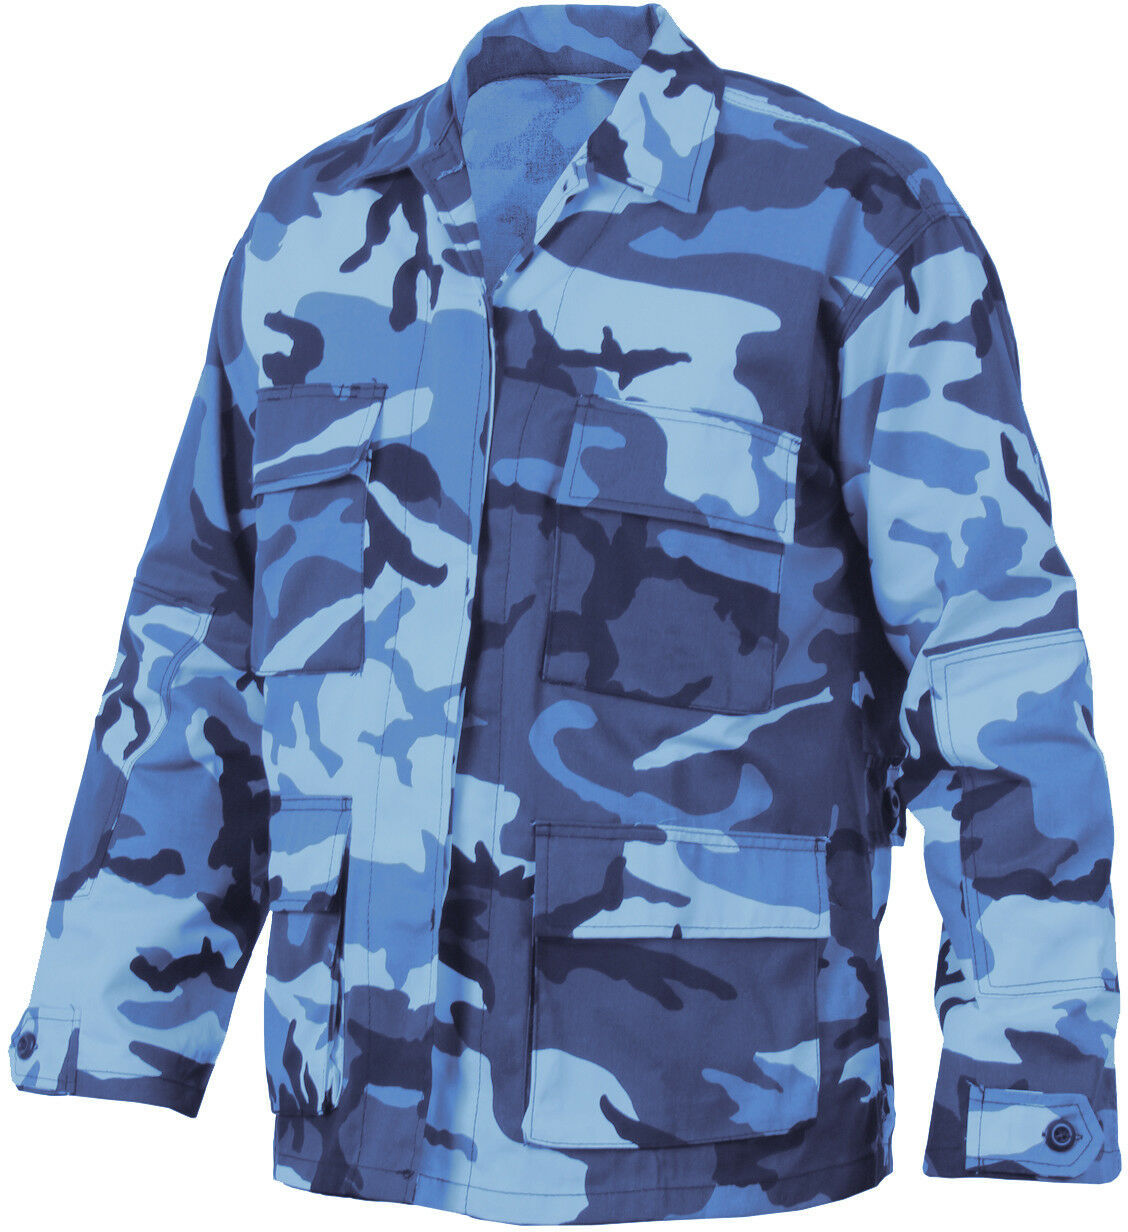 Mens Sky Blue Camouflage Military Bdu Shirt Tactical Uniform Army Coat Fatigues - Casual Shirts